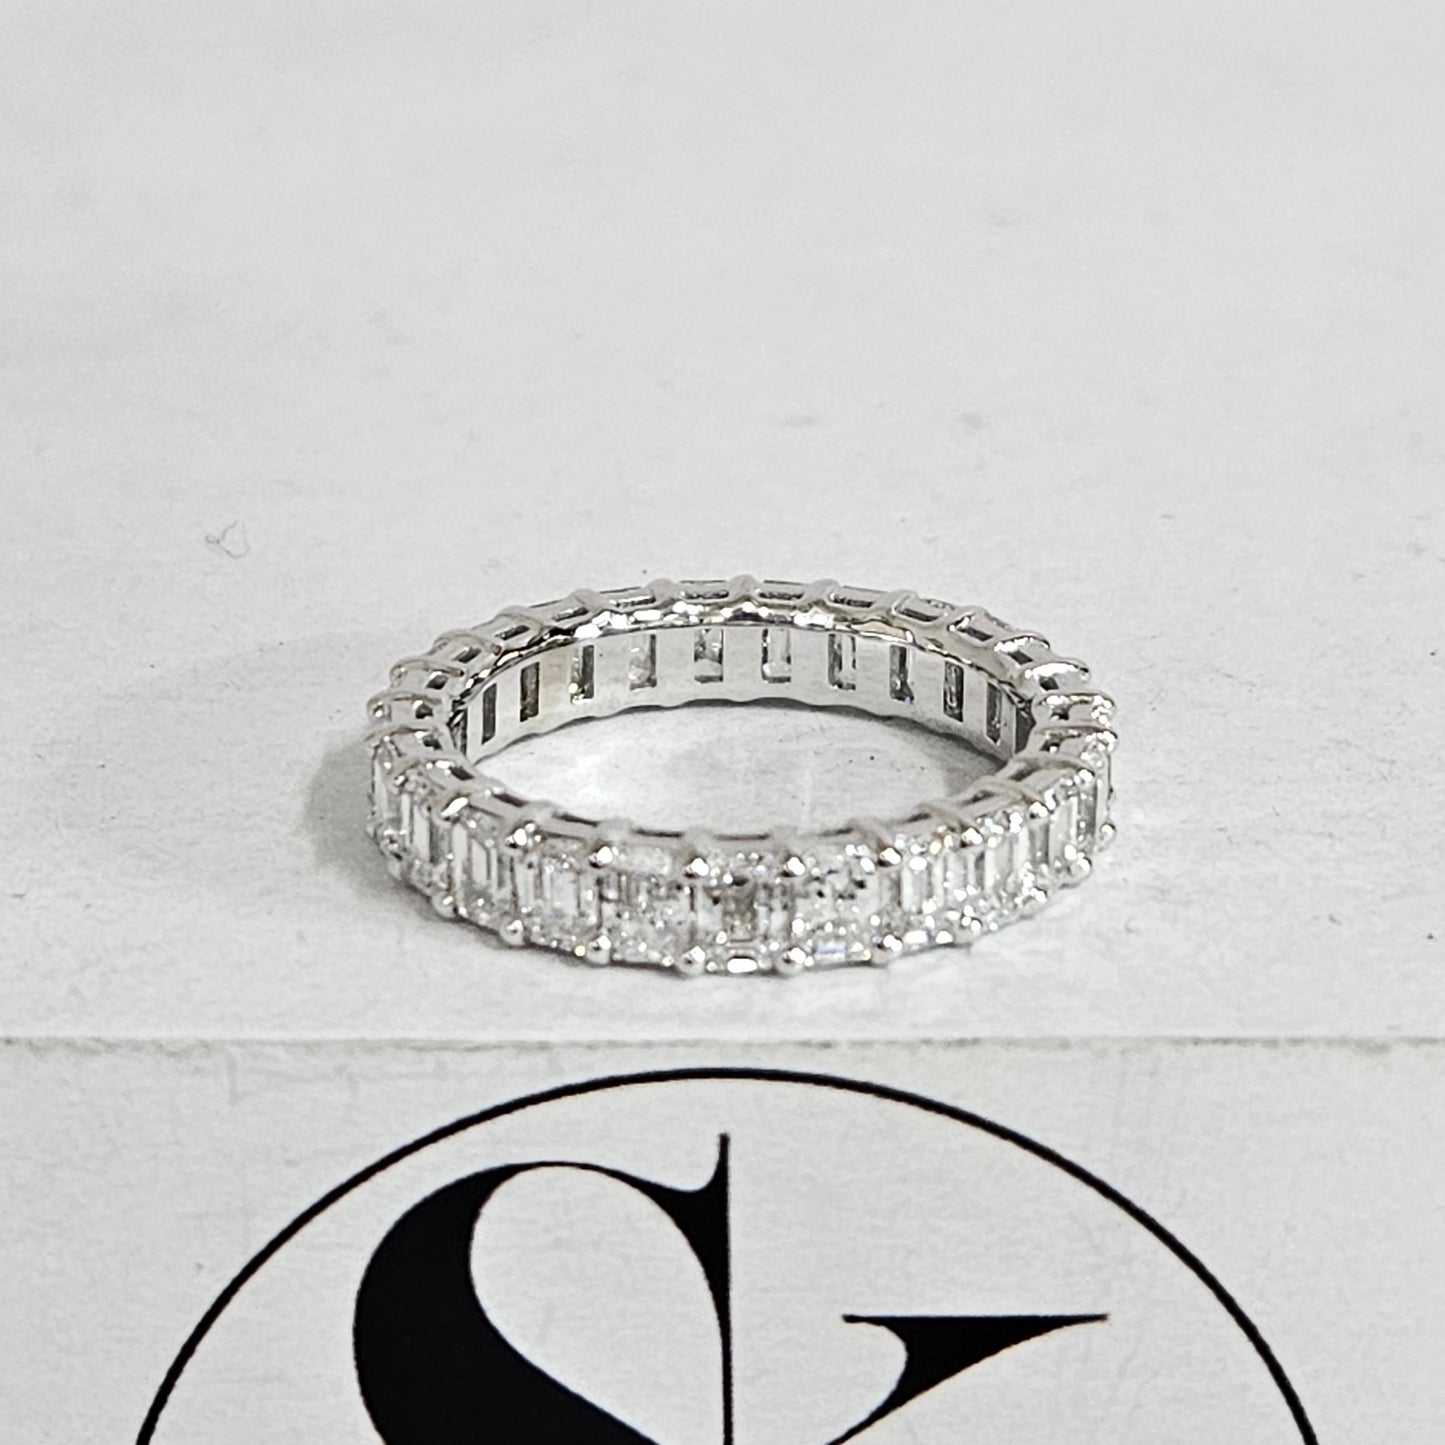 3.8ct Emerald Cut Diamond Ring/Emerald Cut Diamond Wedding Band/ Full Eternity Width 4.3mm Double Wire Setting Wedding Ring/Anniversary gift